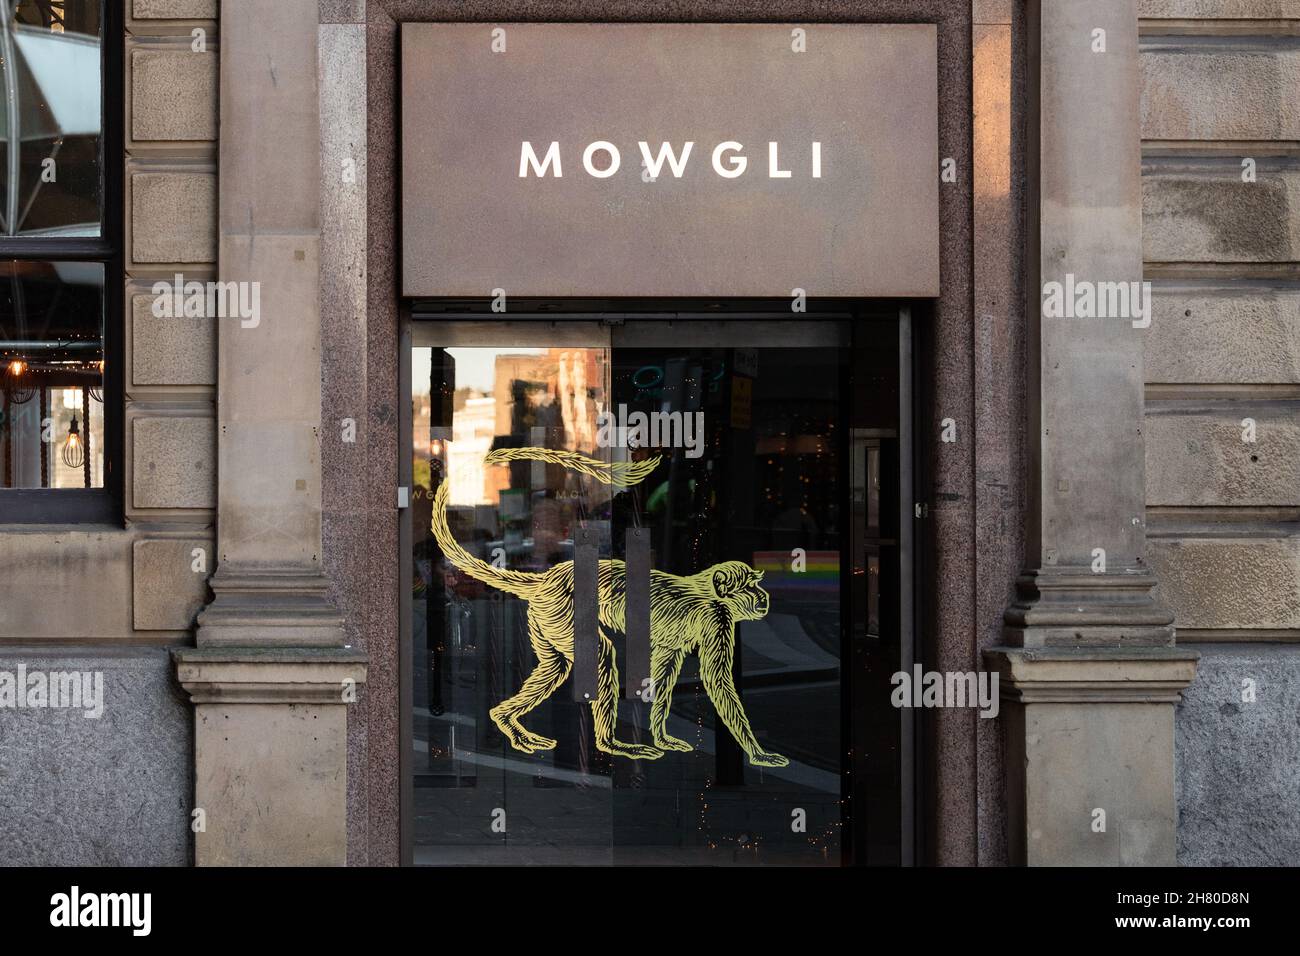 Mowgli restaurant, Water Street, Liverpool, England, UK Stock Photo